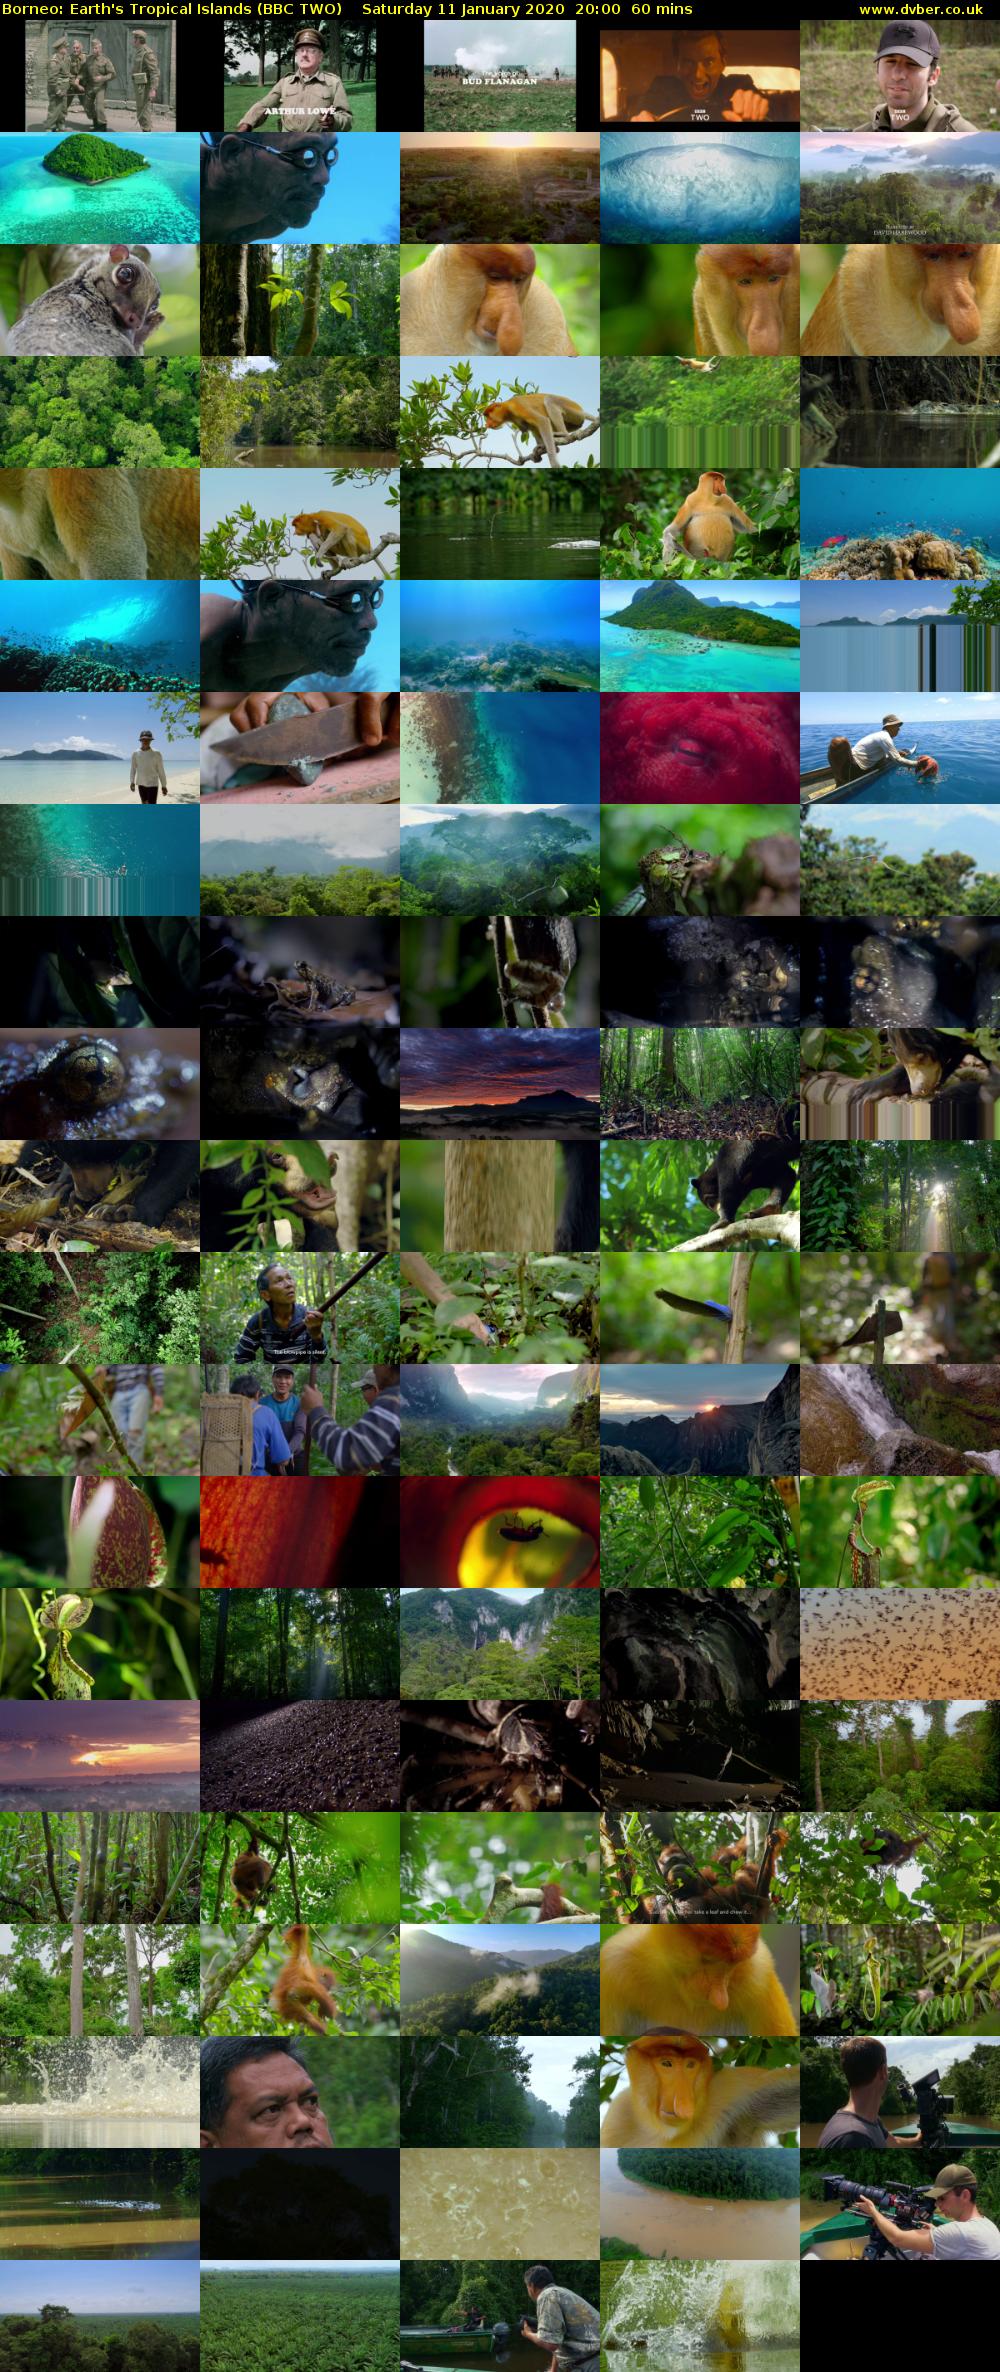 Borneo: Earth's Tropical Islands (BBC TWO) Saturday 11 January 2020 20:00 - 21:00